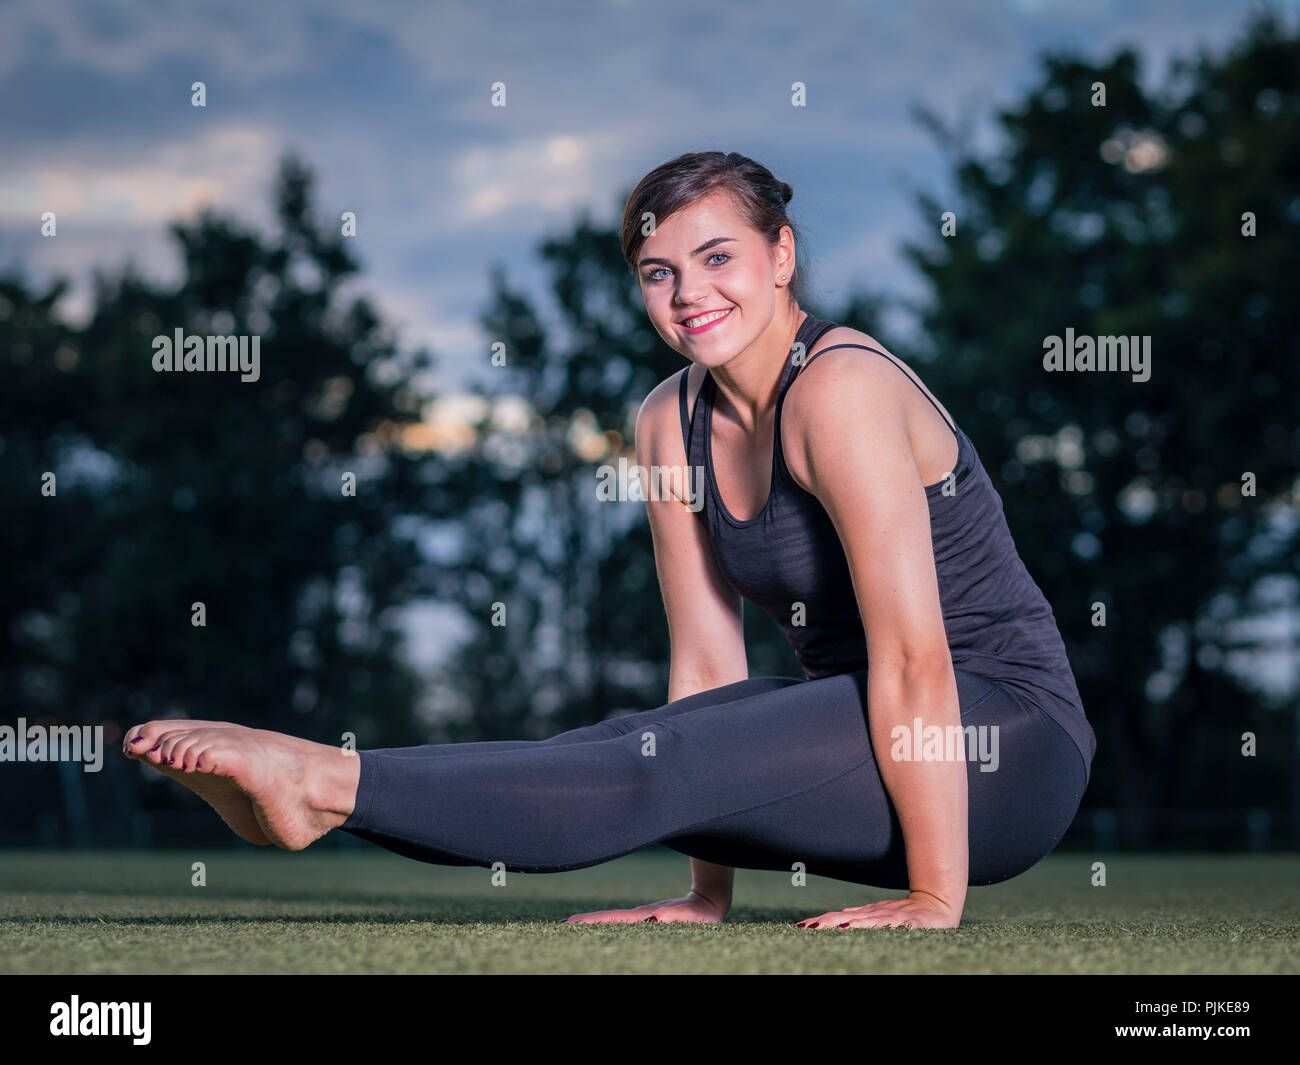 Woman, 25 years, acrobatic fitness training Stock Photo